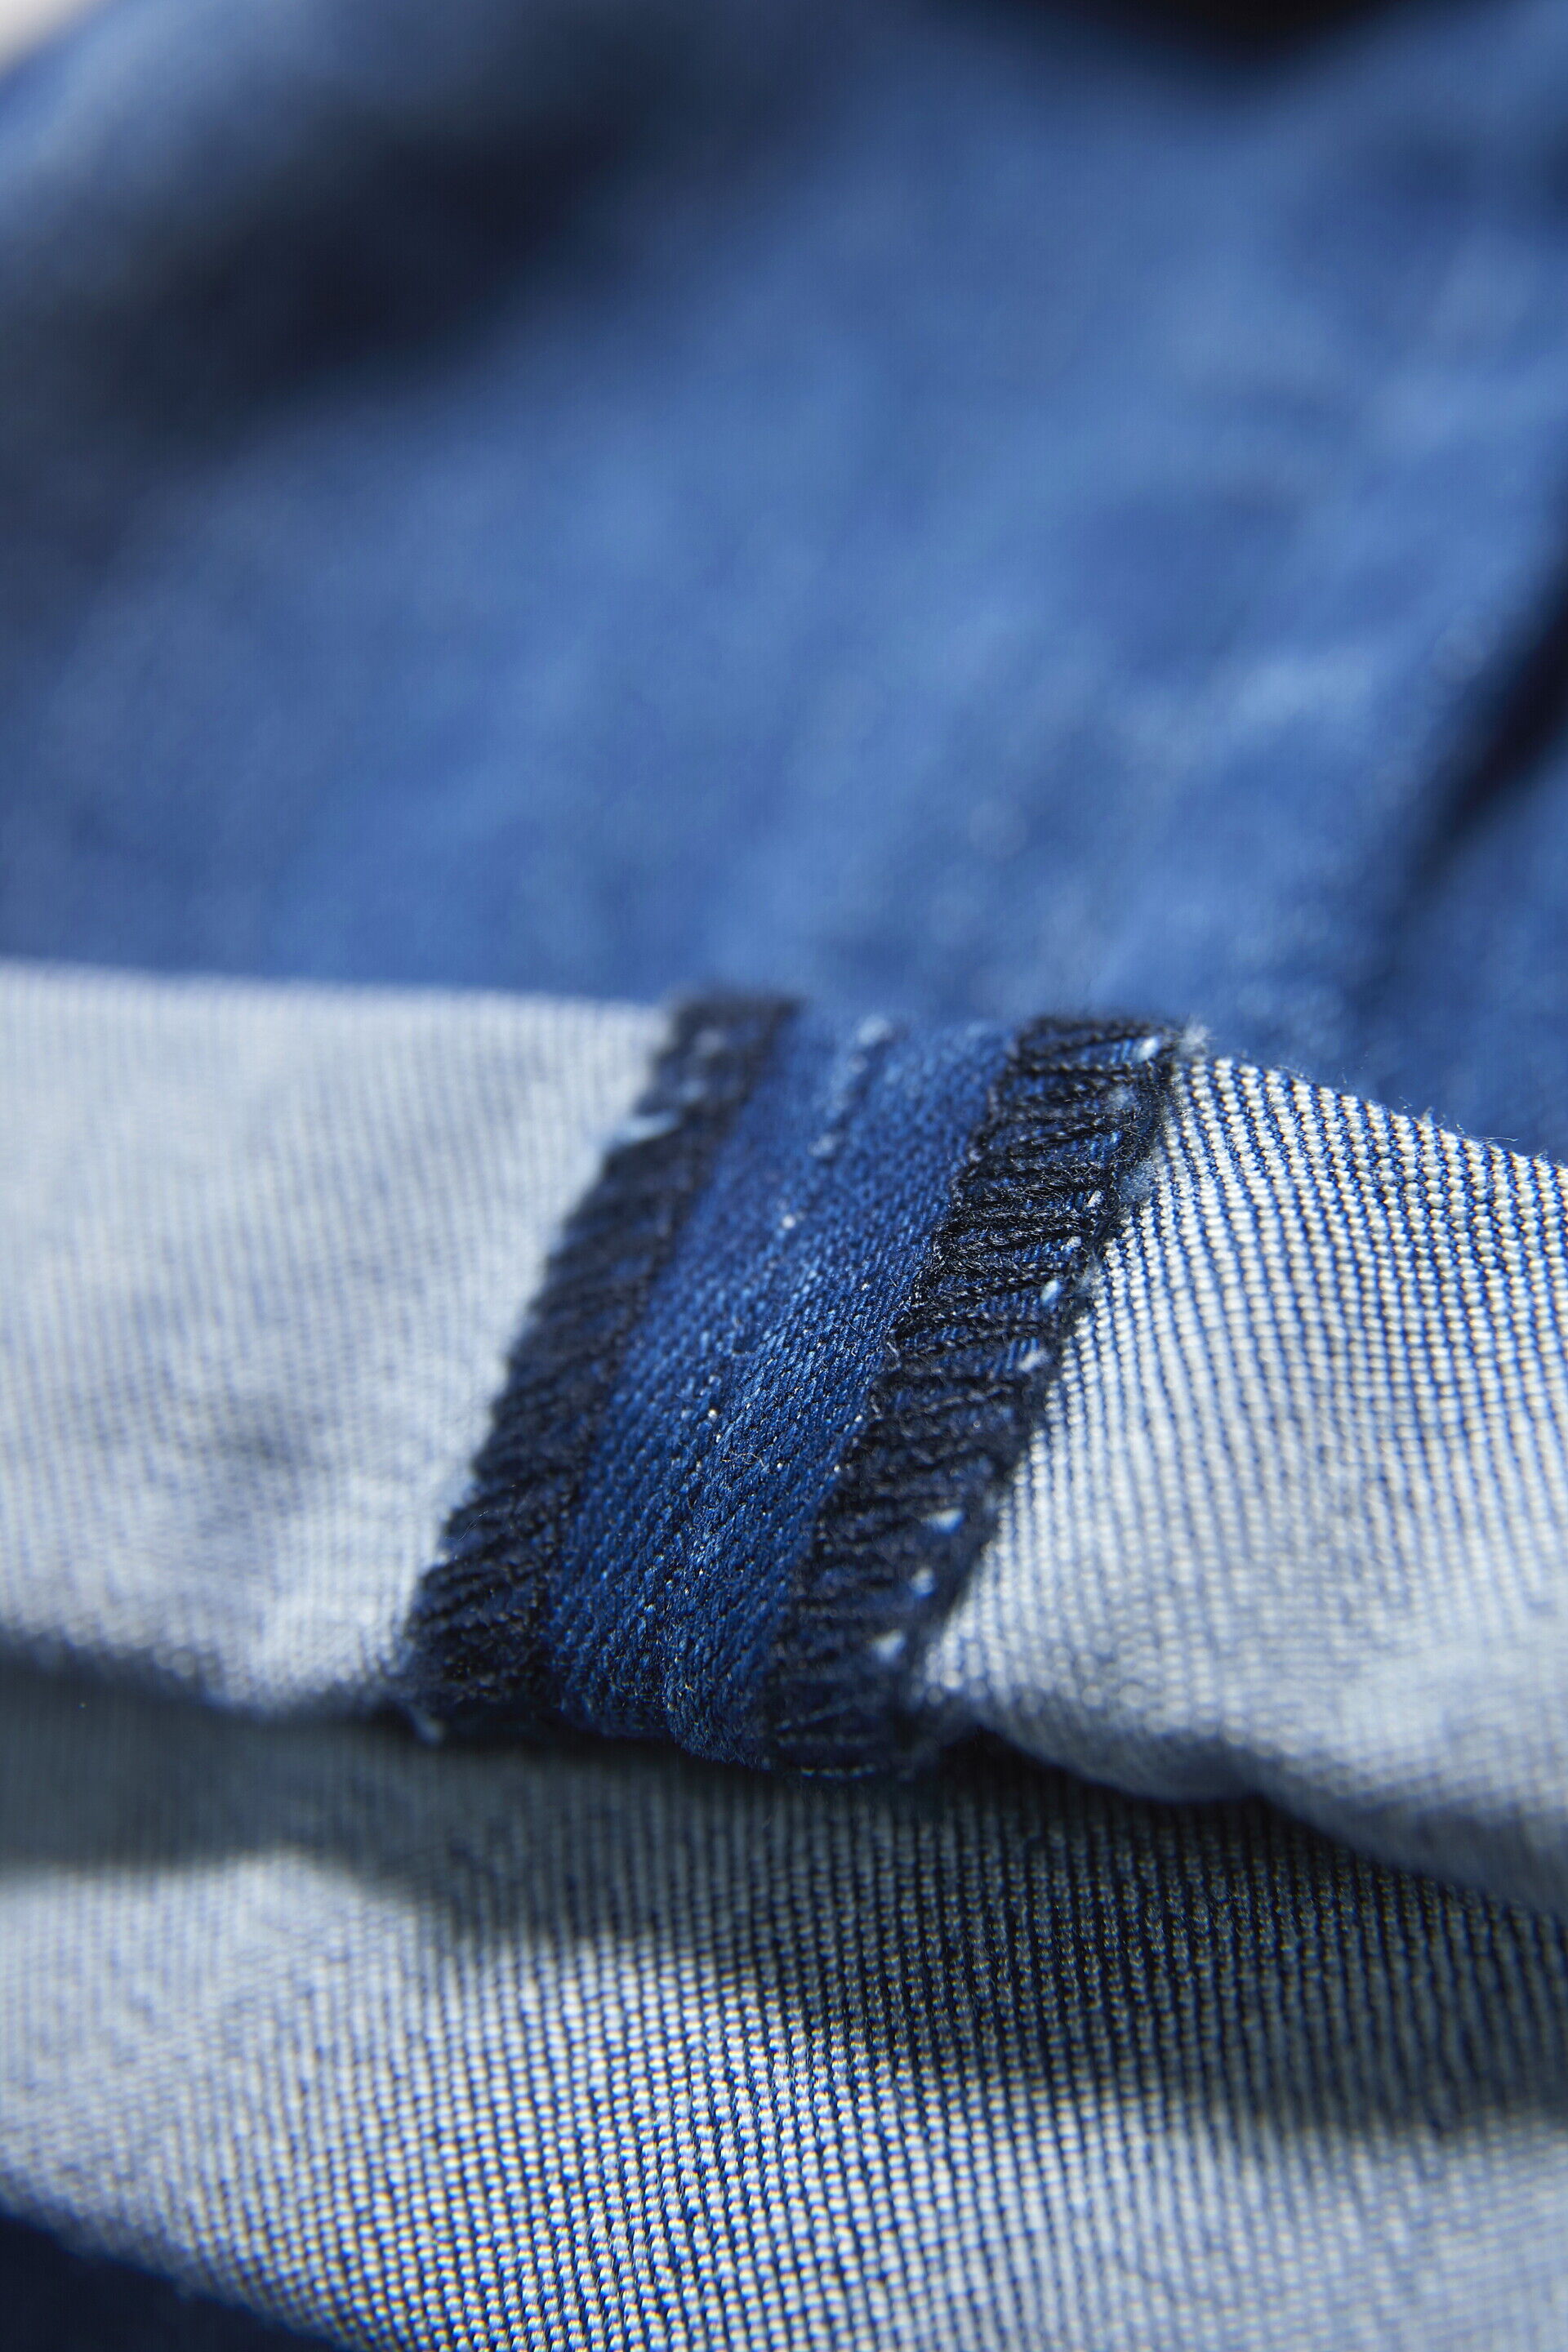 Jeans-Shorts 30-551001TBL